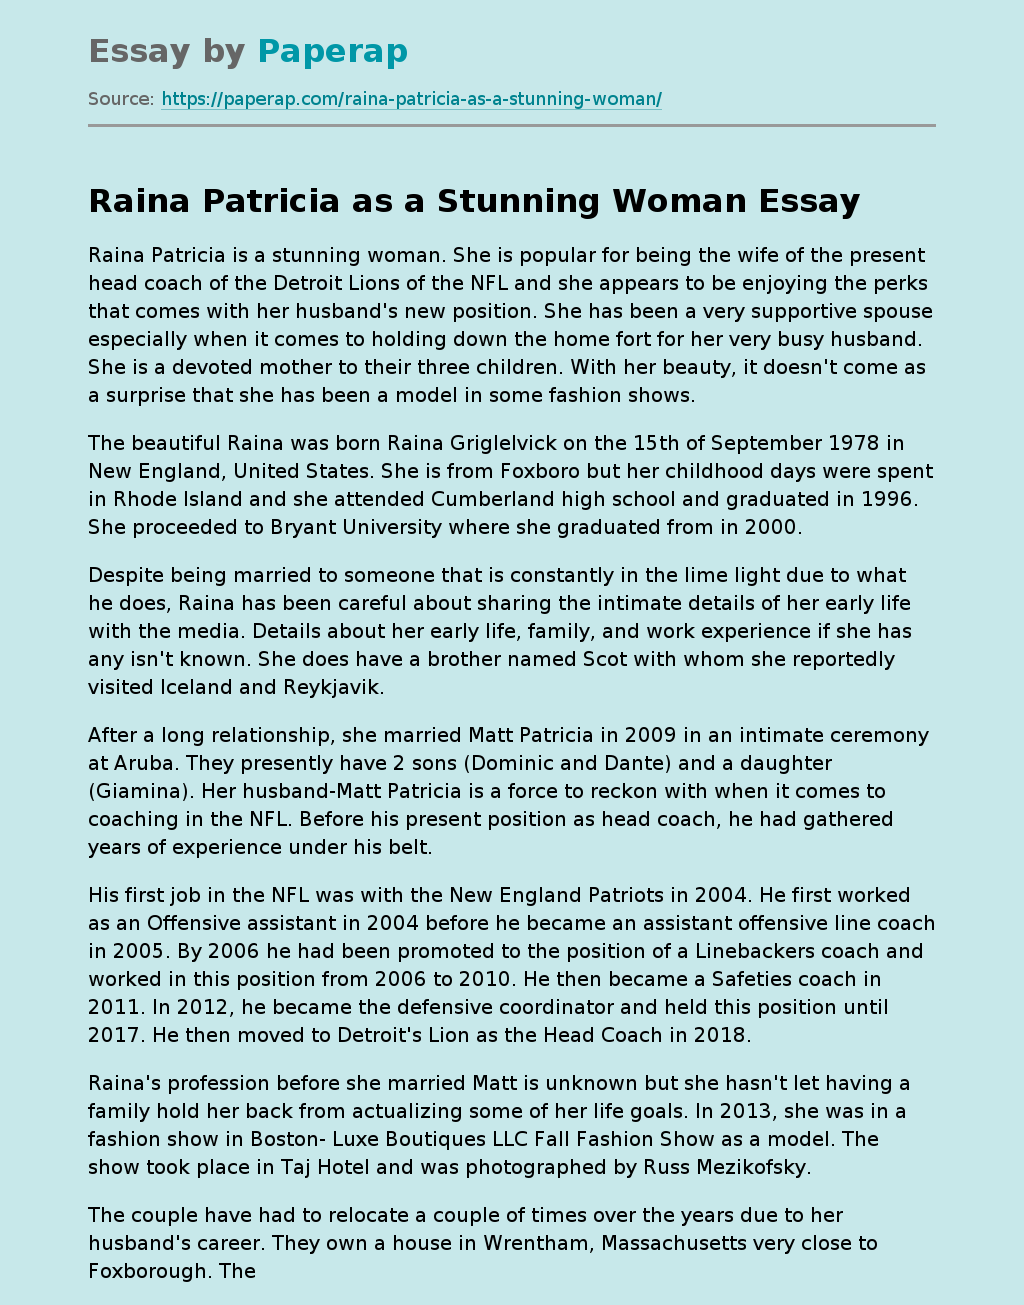 Raina Patricia as a Stunning Woman